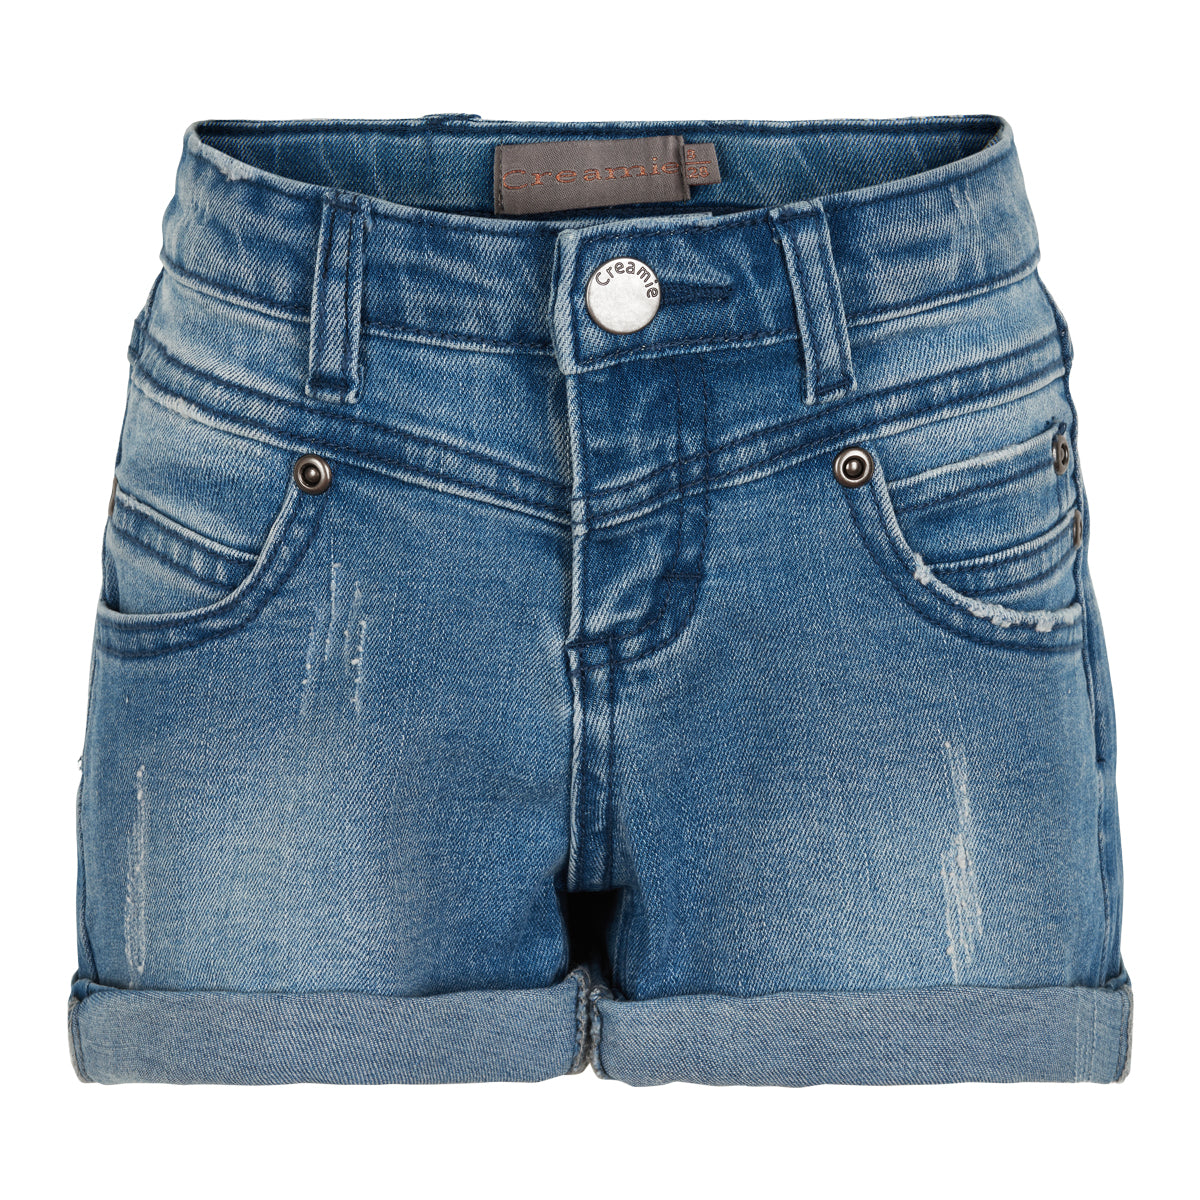 Creamie - Denim Shorts (821708) - Light Blue Denim